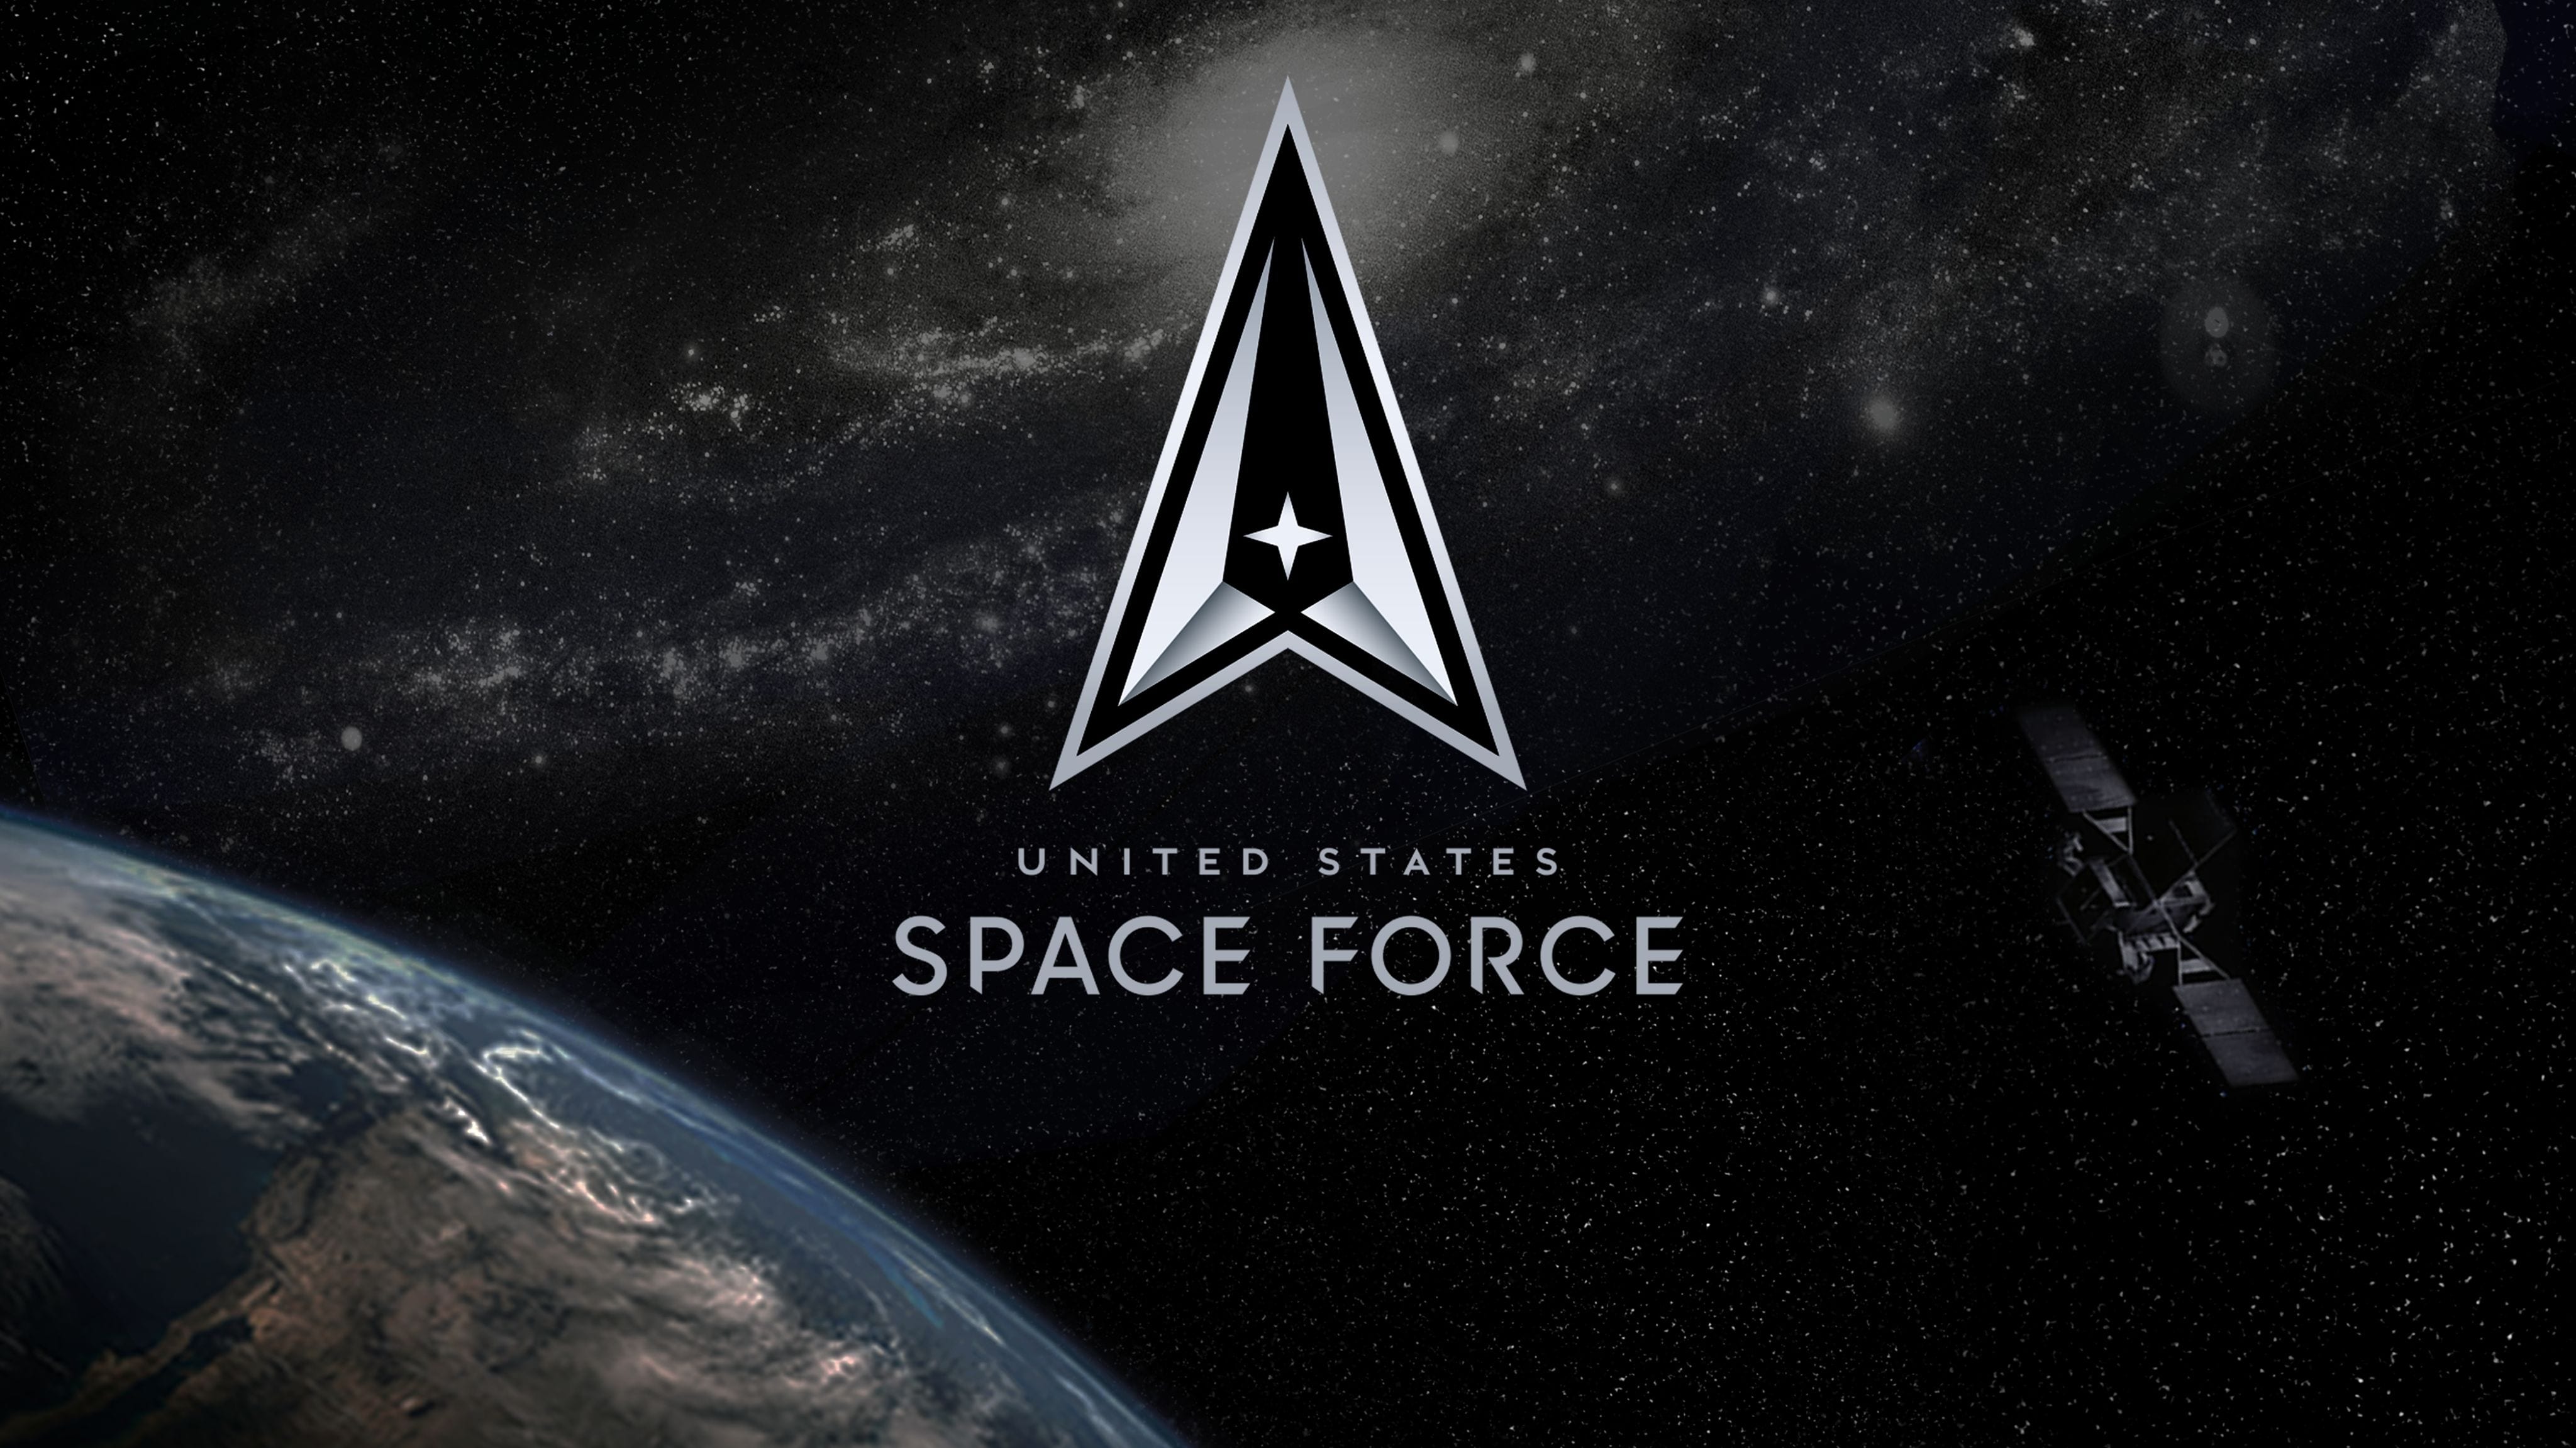 U.S. Space Force